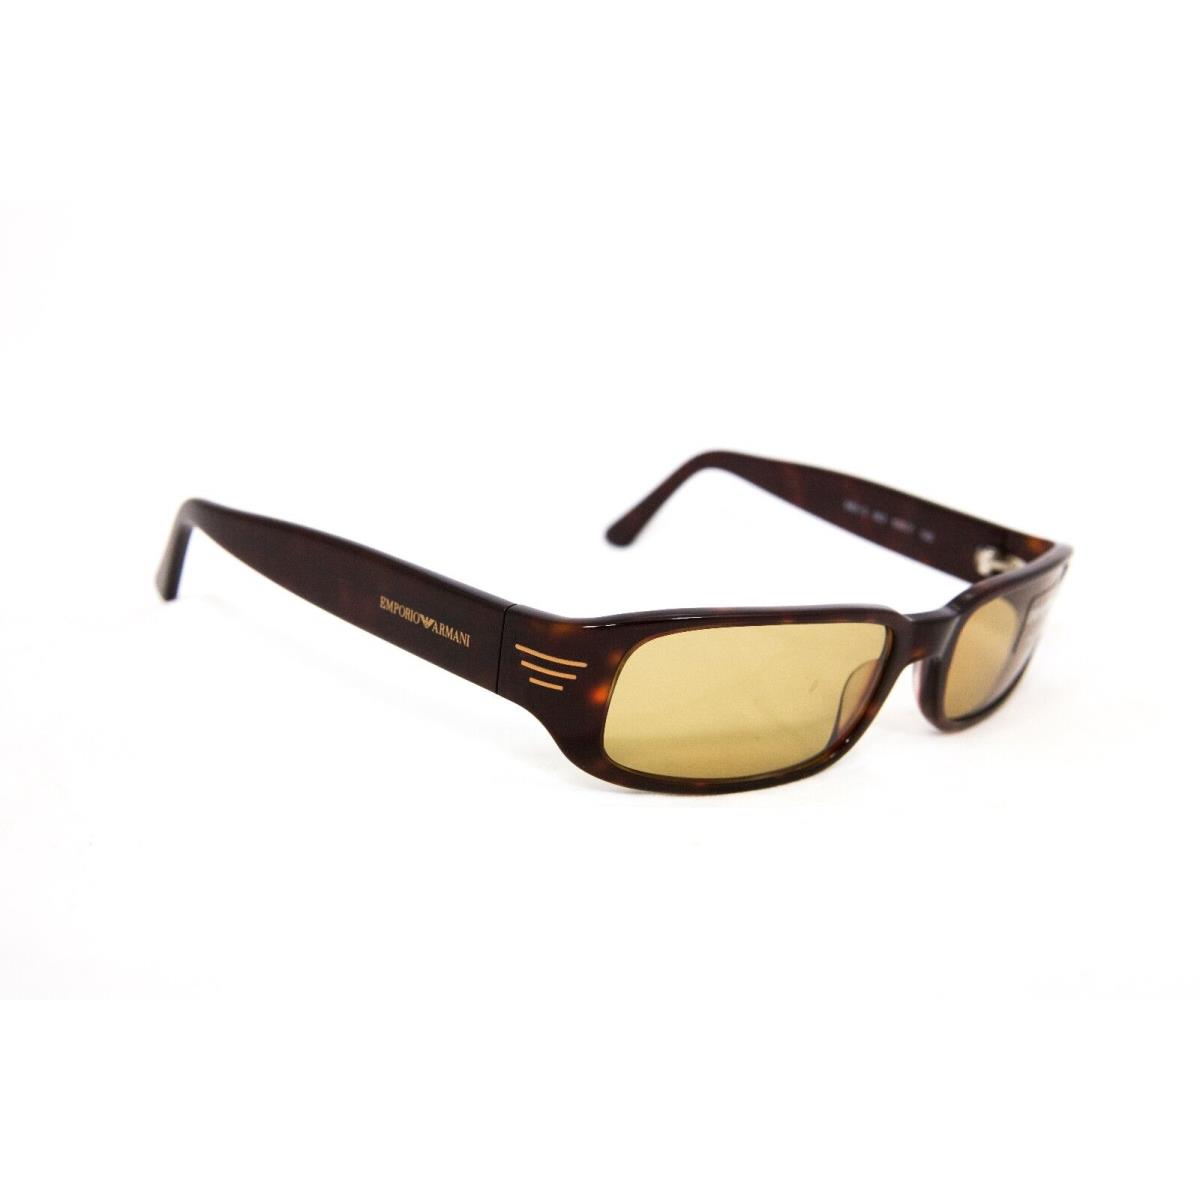 Emporio Armani Rimmed Eyeglasses Glasses Sunglasses 665/S 31